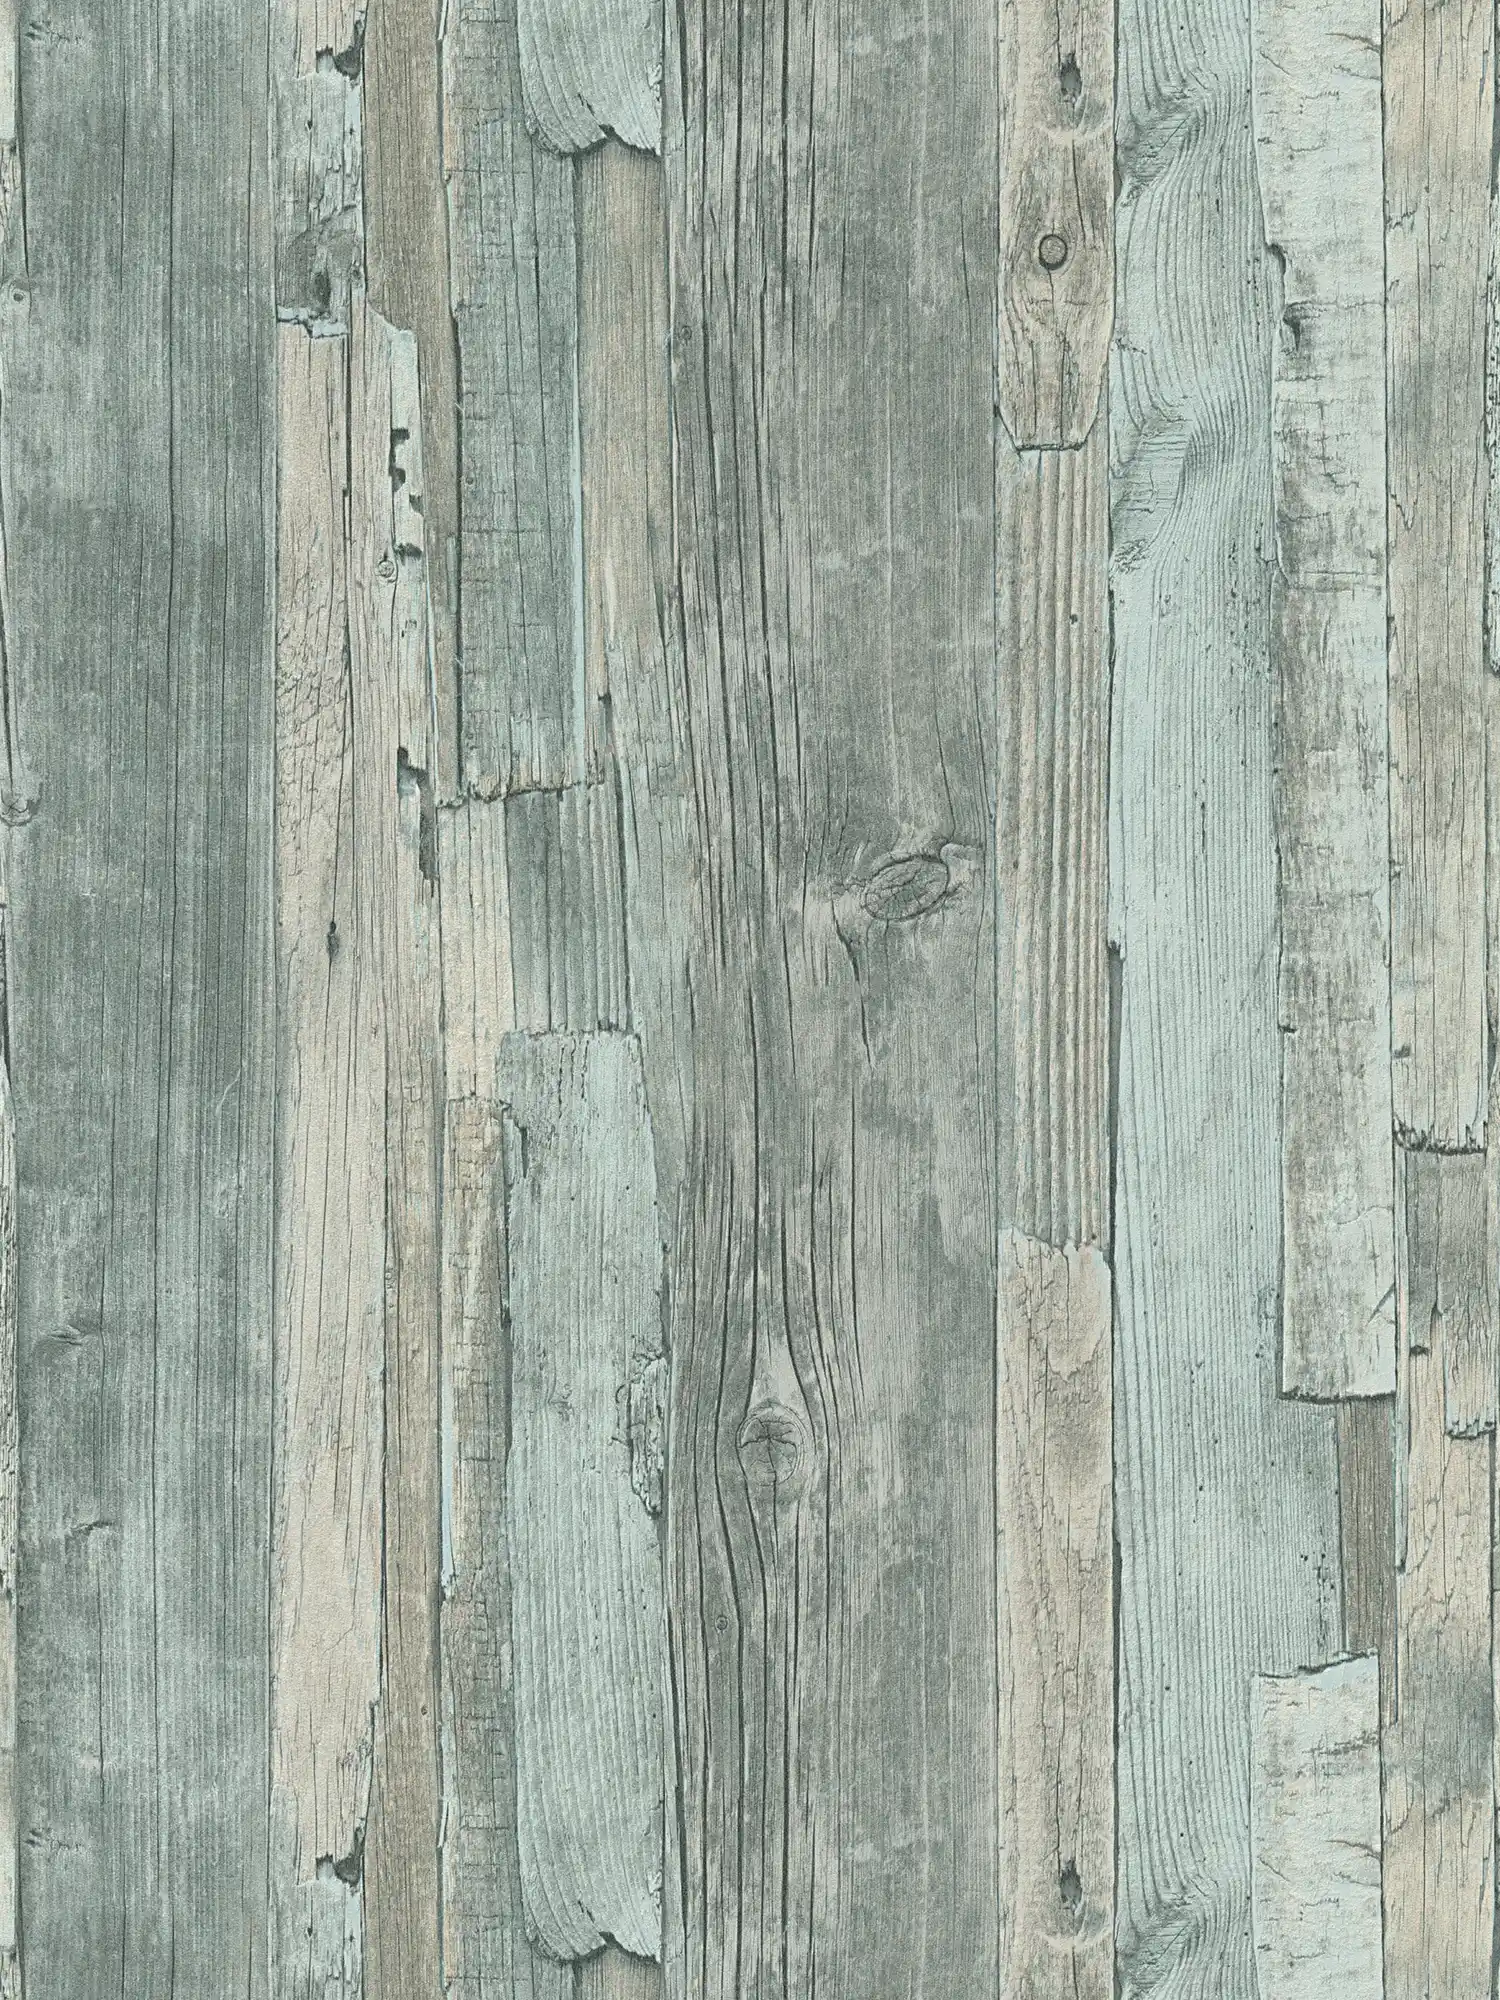 Beach Wood vliesbehang houtlook in Shabby Chic stijl - groen
